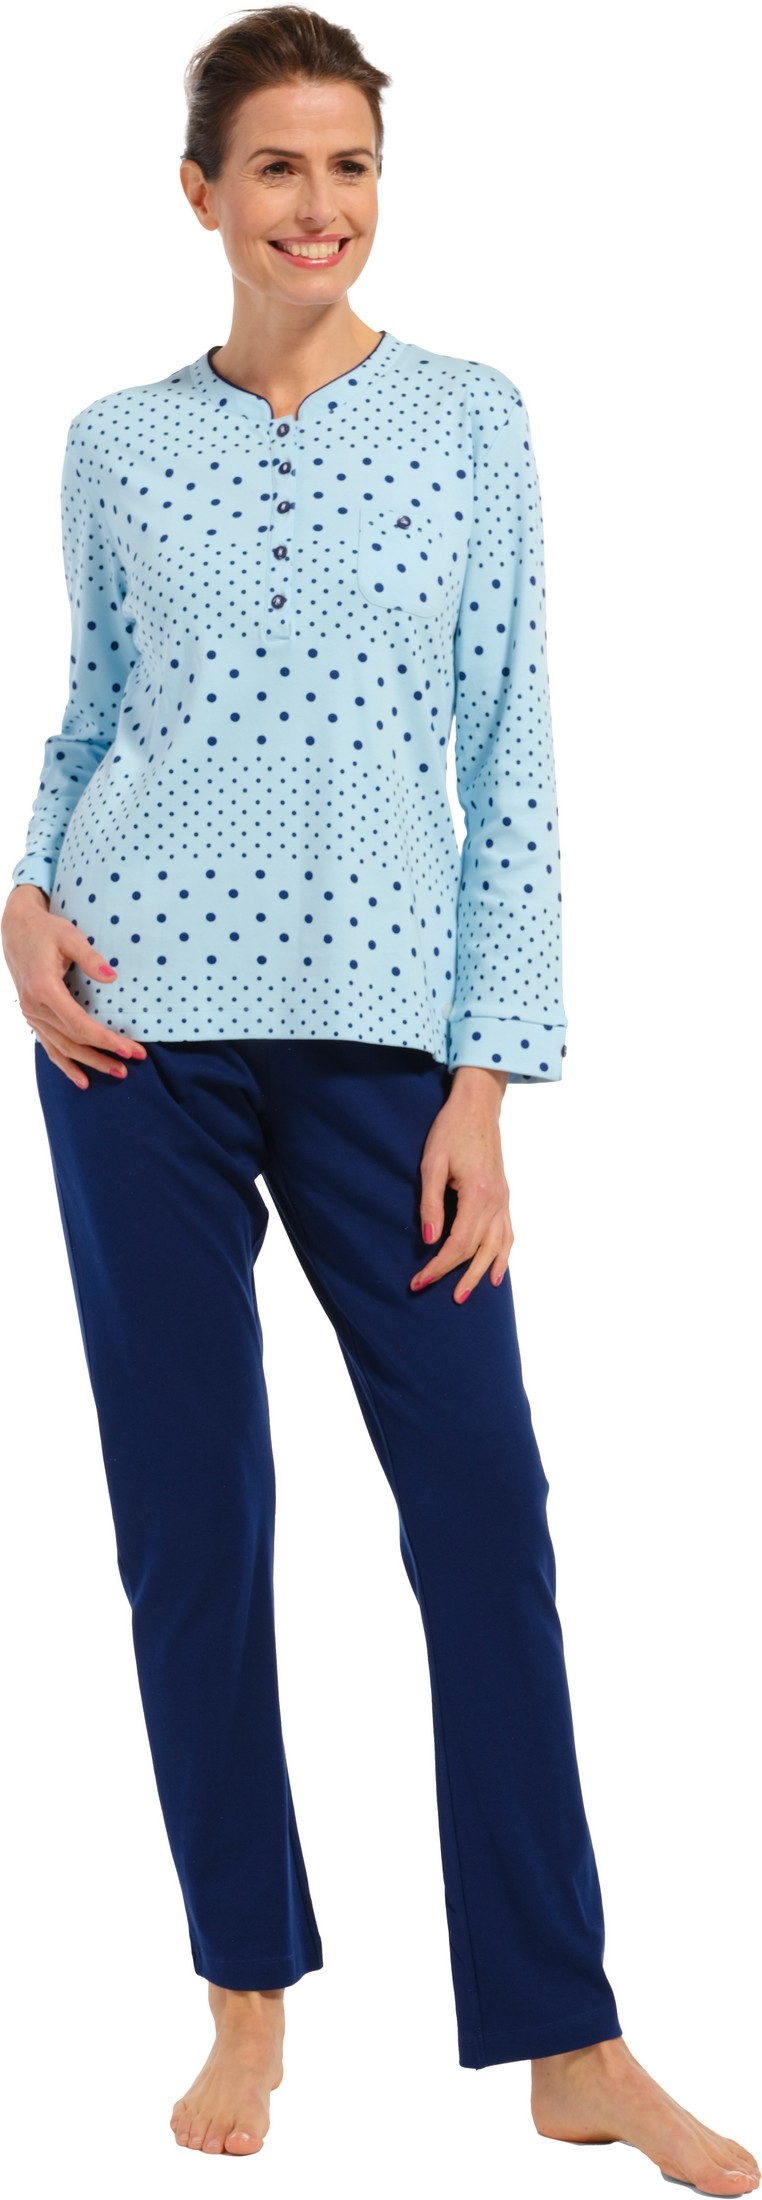 Pastunette dames pyjama 20232-162-4 - Blauw - 46